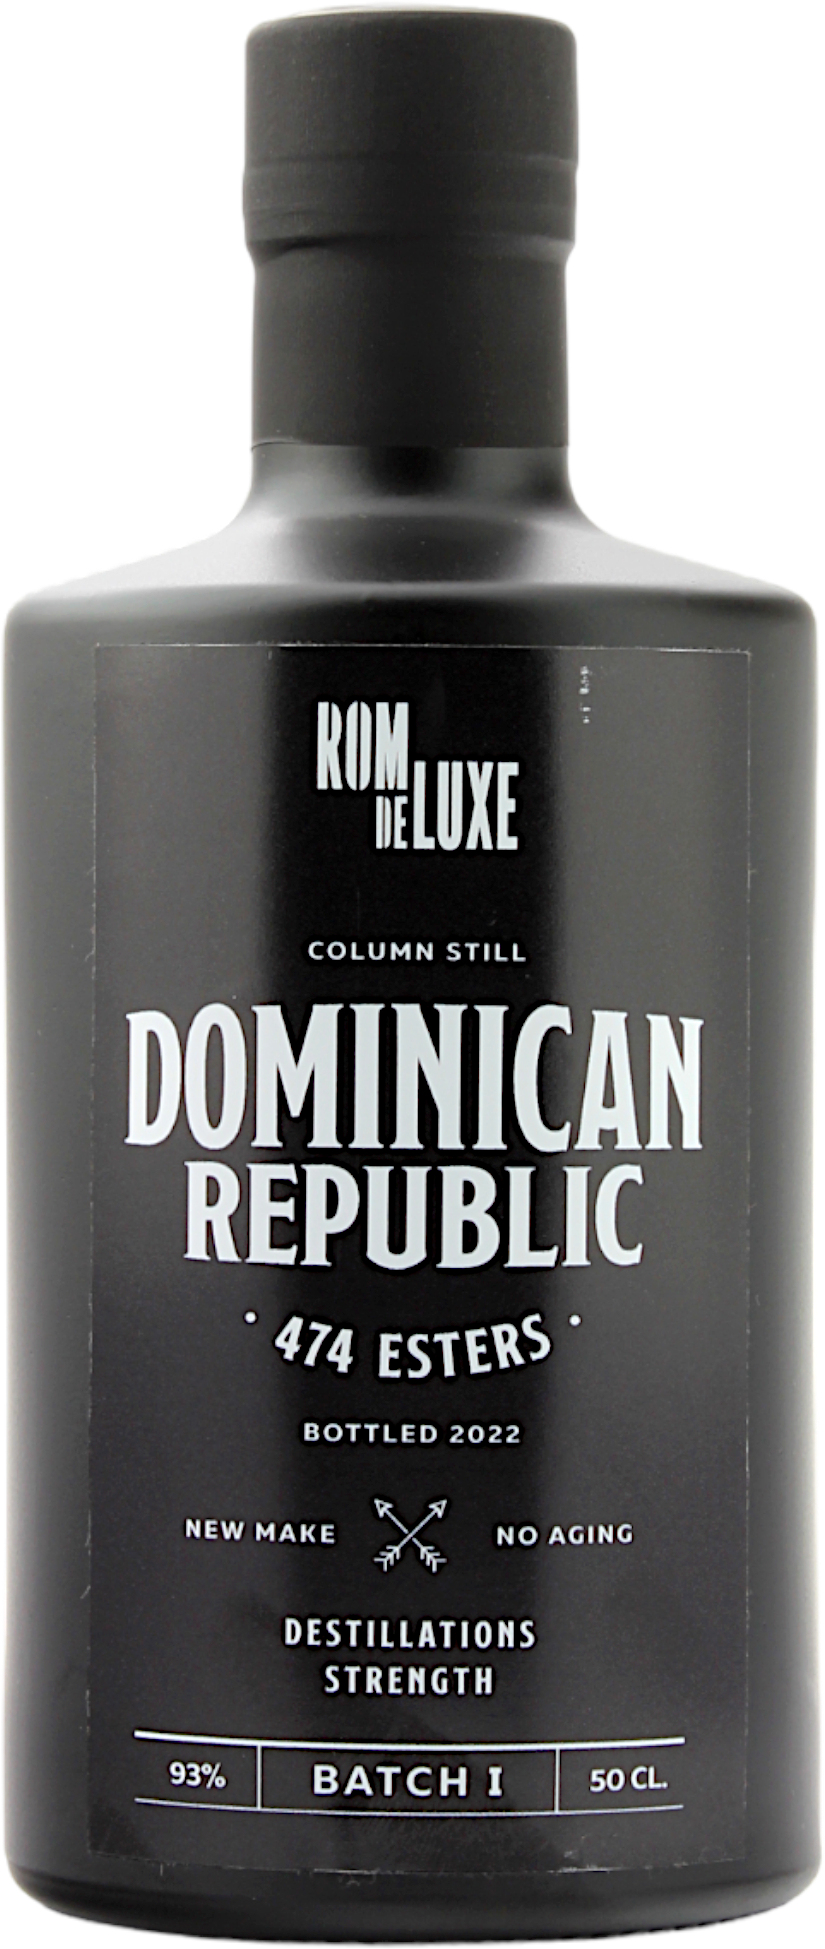 Dominican Republic New Make RomDeLuxe 93.0% 0,5l